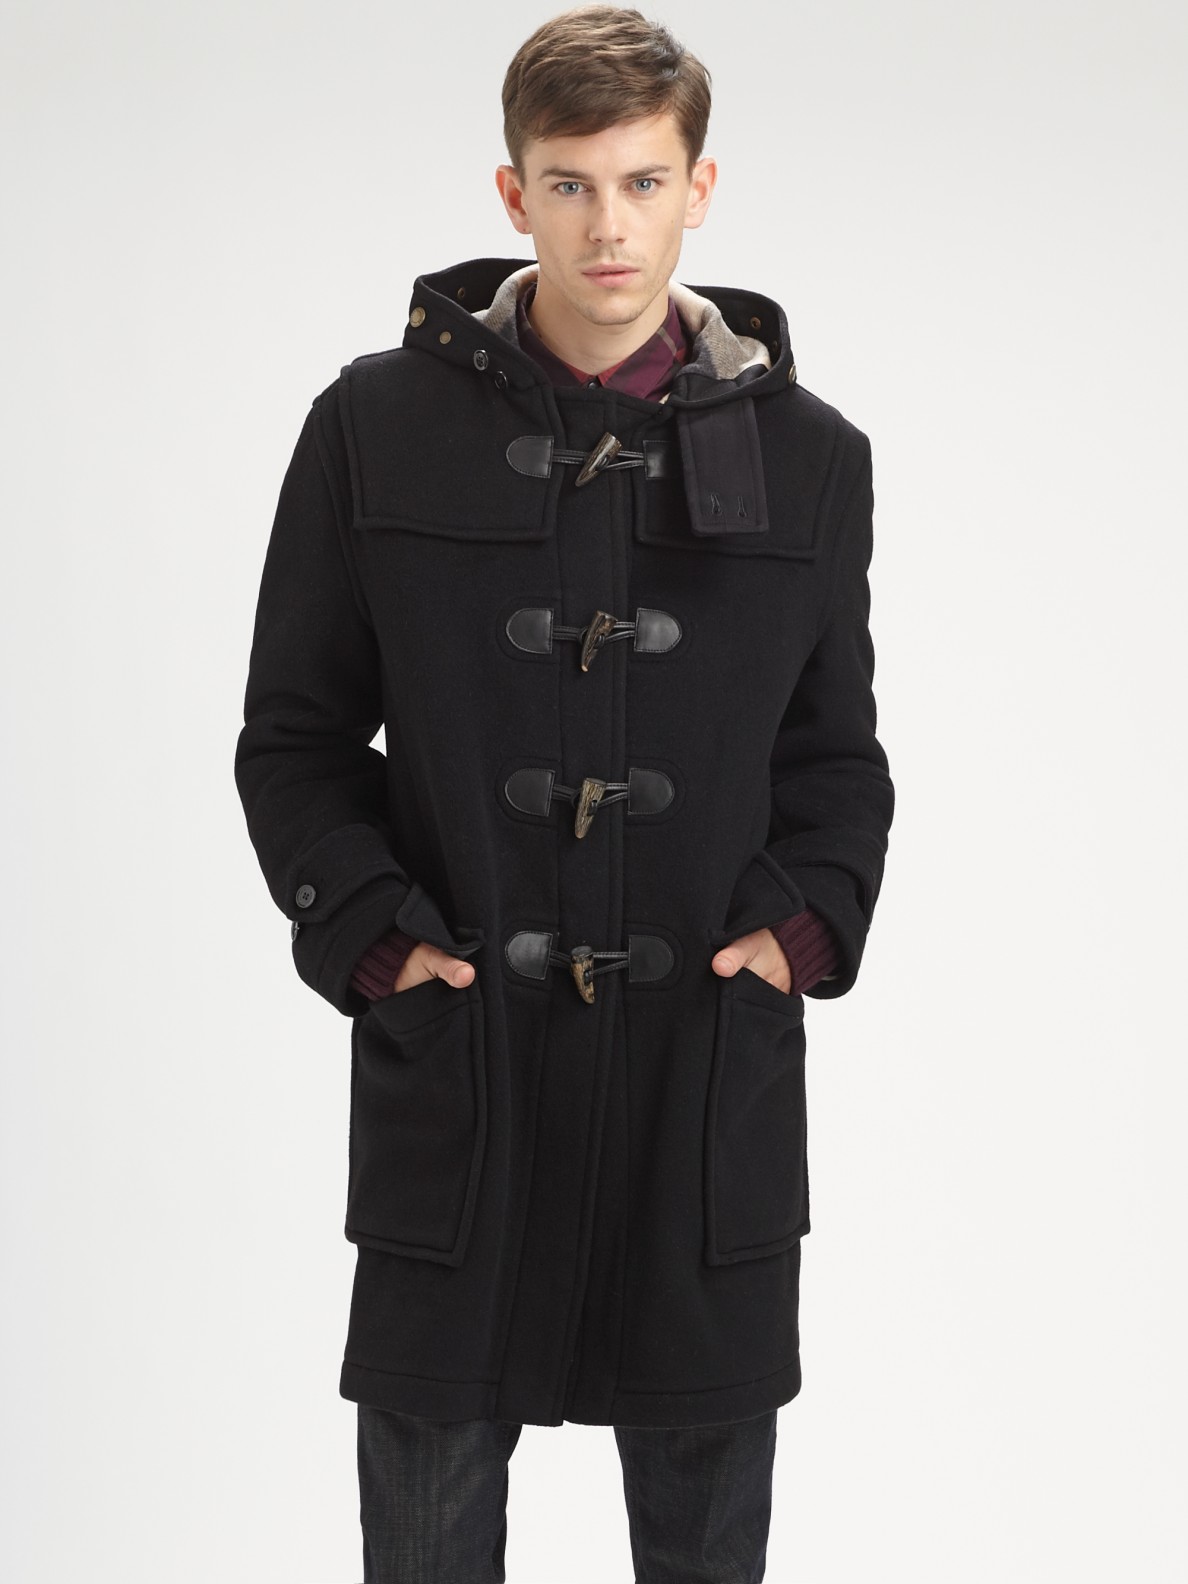 Burberry Brit Duffle Coat in Black for Men - Lyst